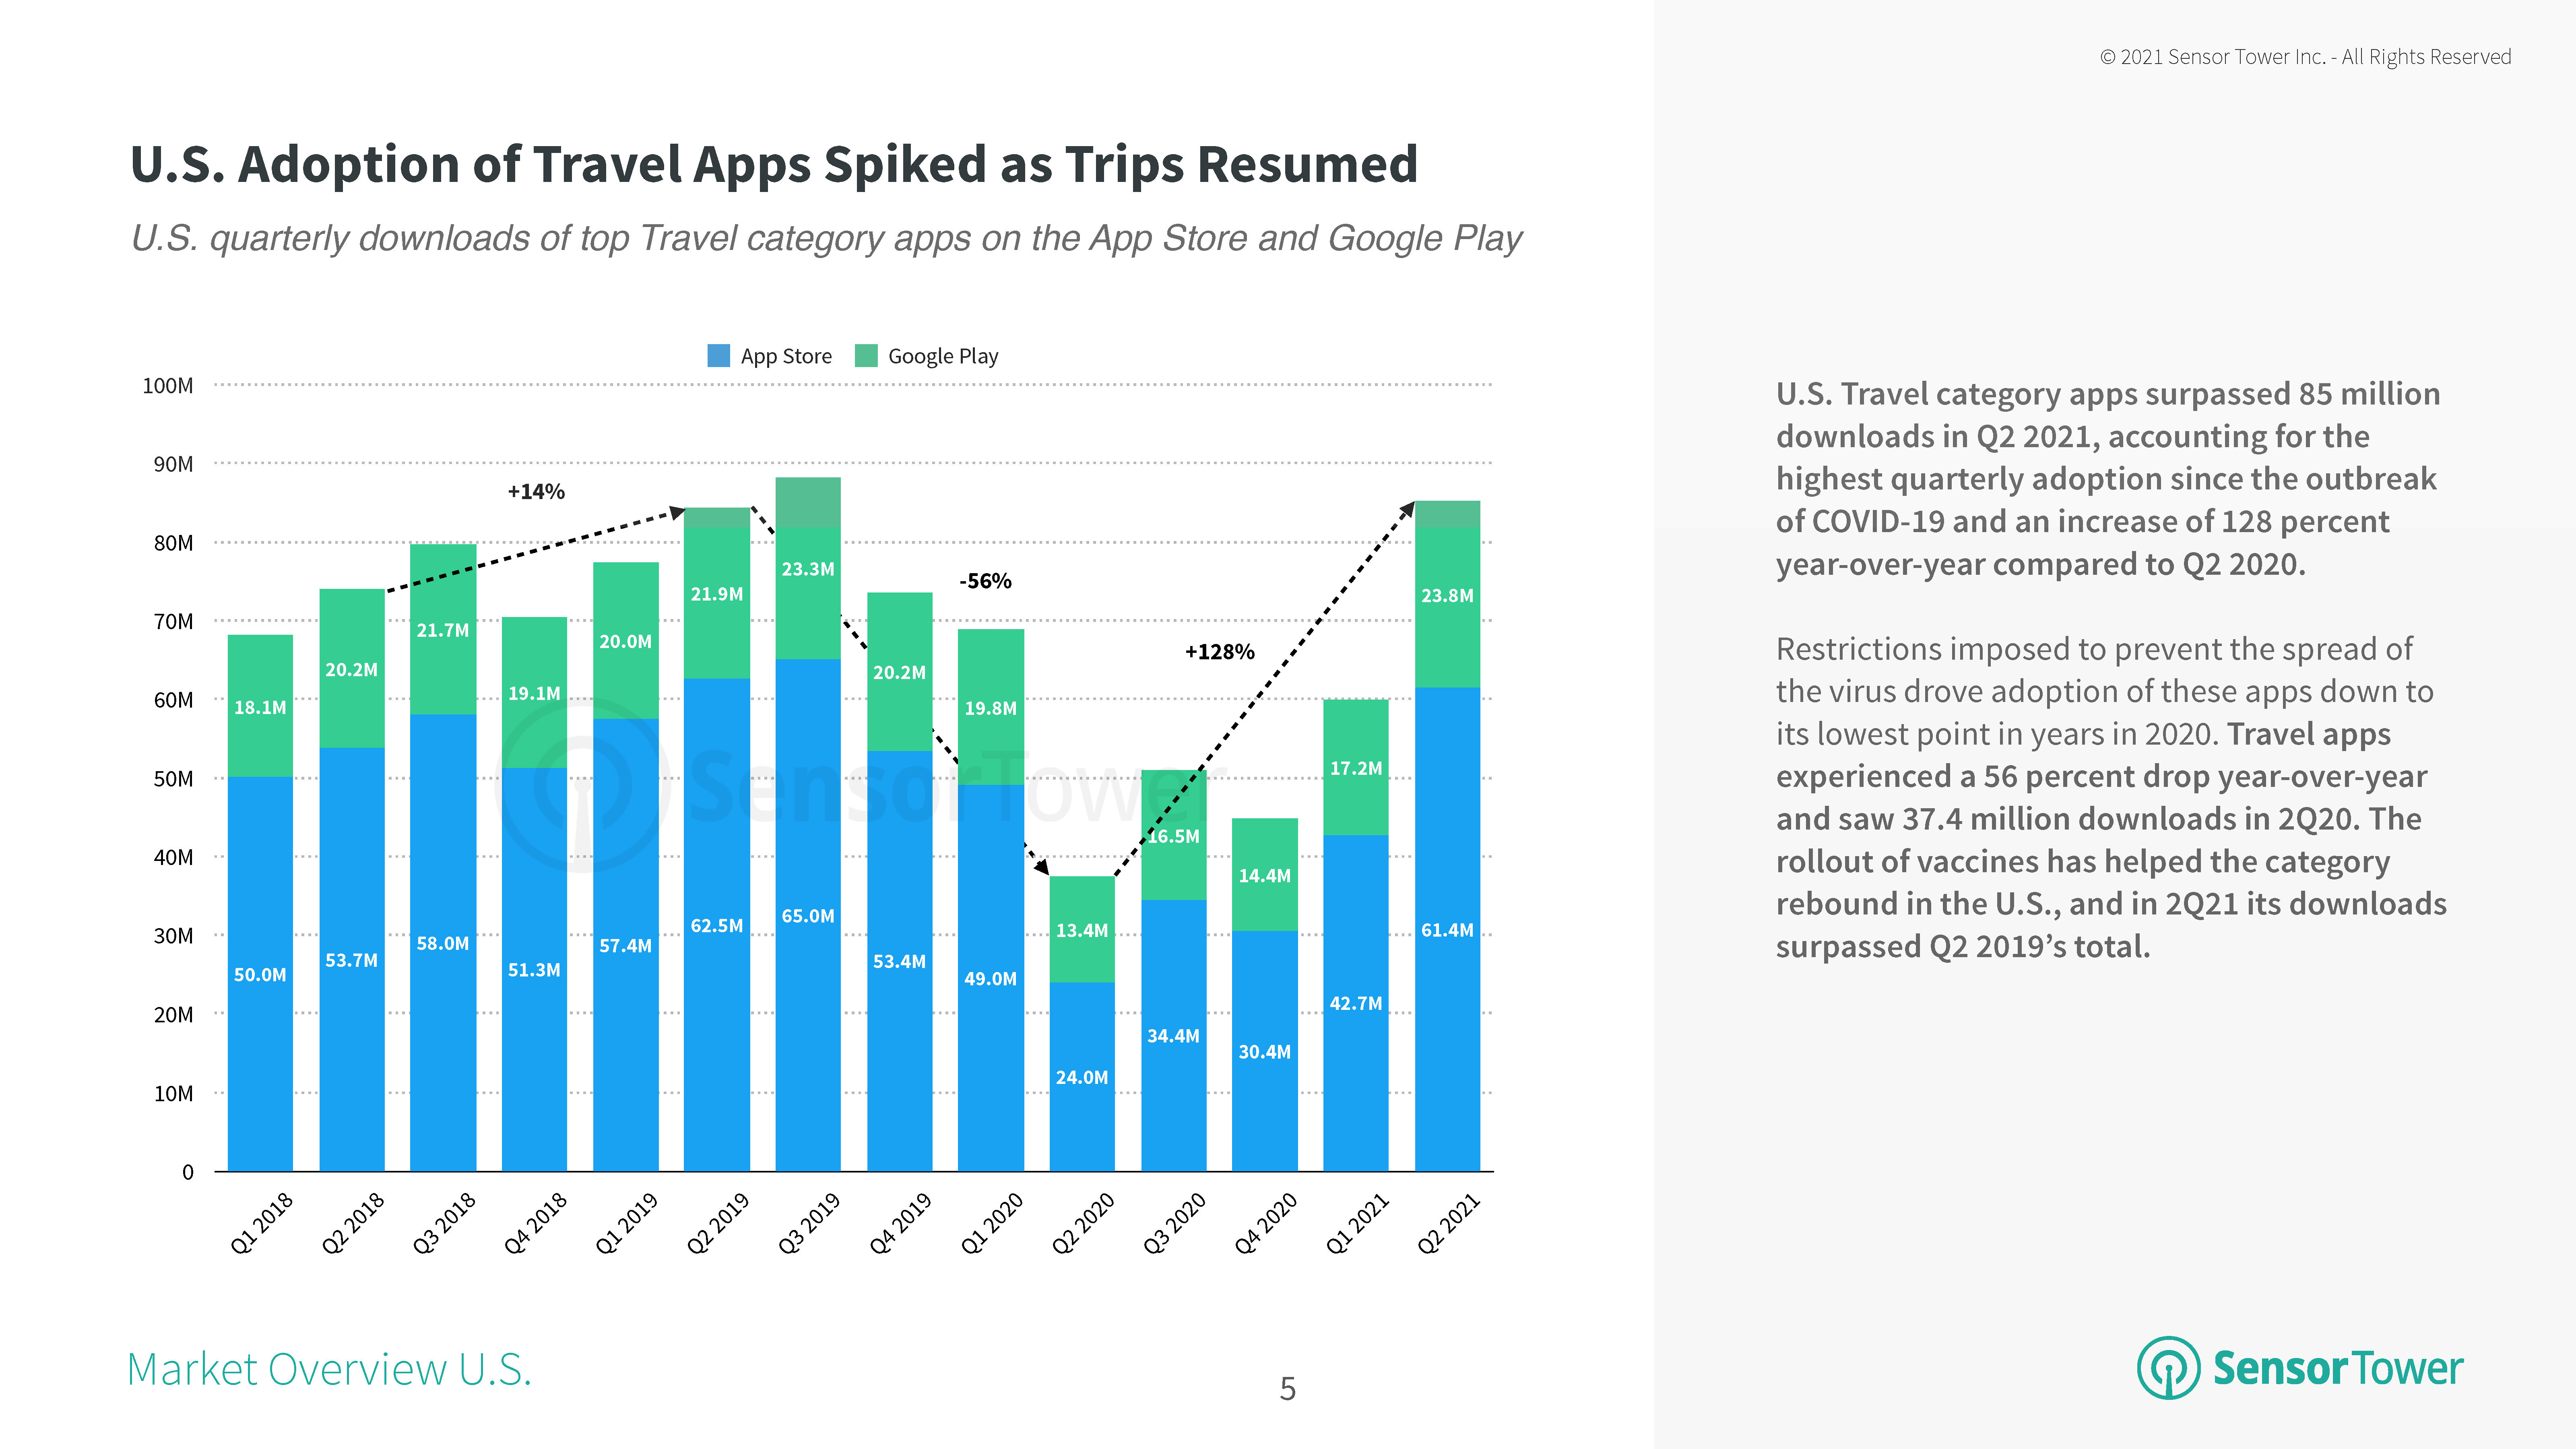 U.S. Travel Apps Surpass 85 Million Downloads